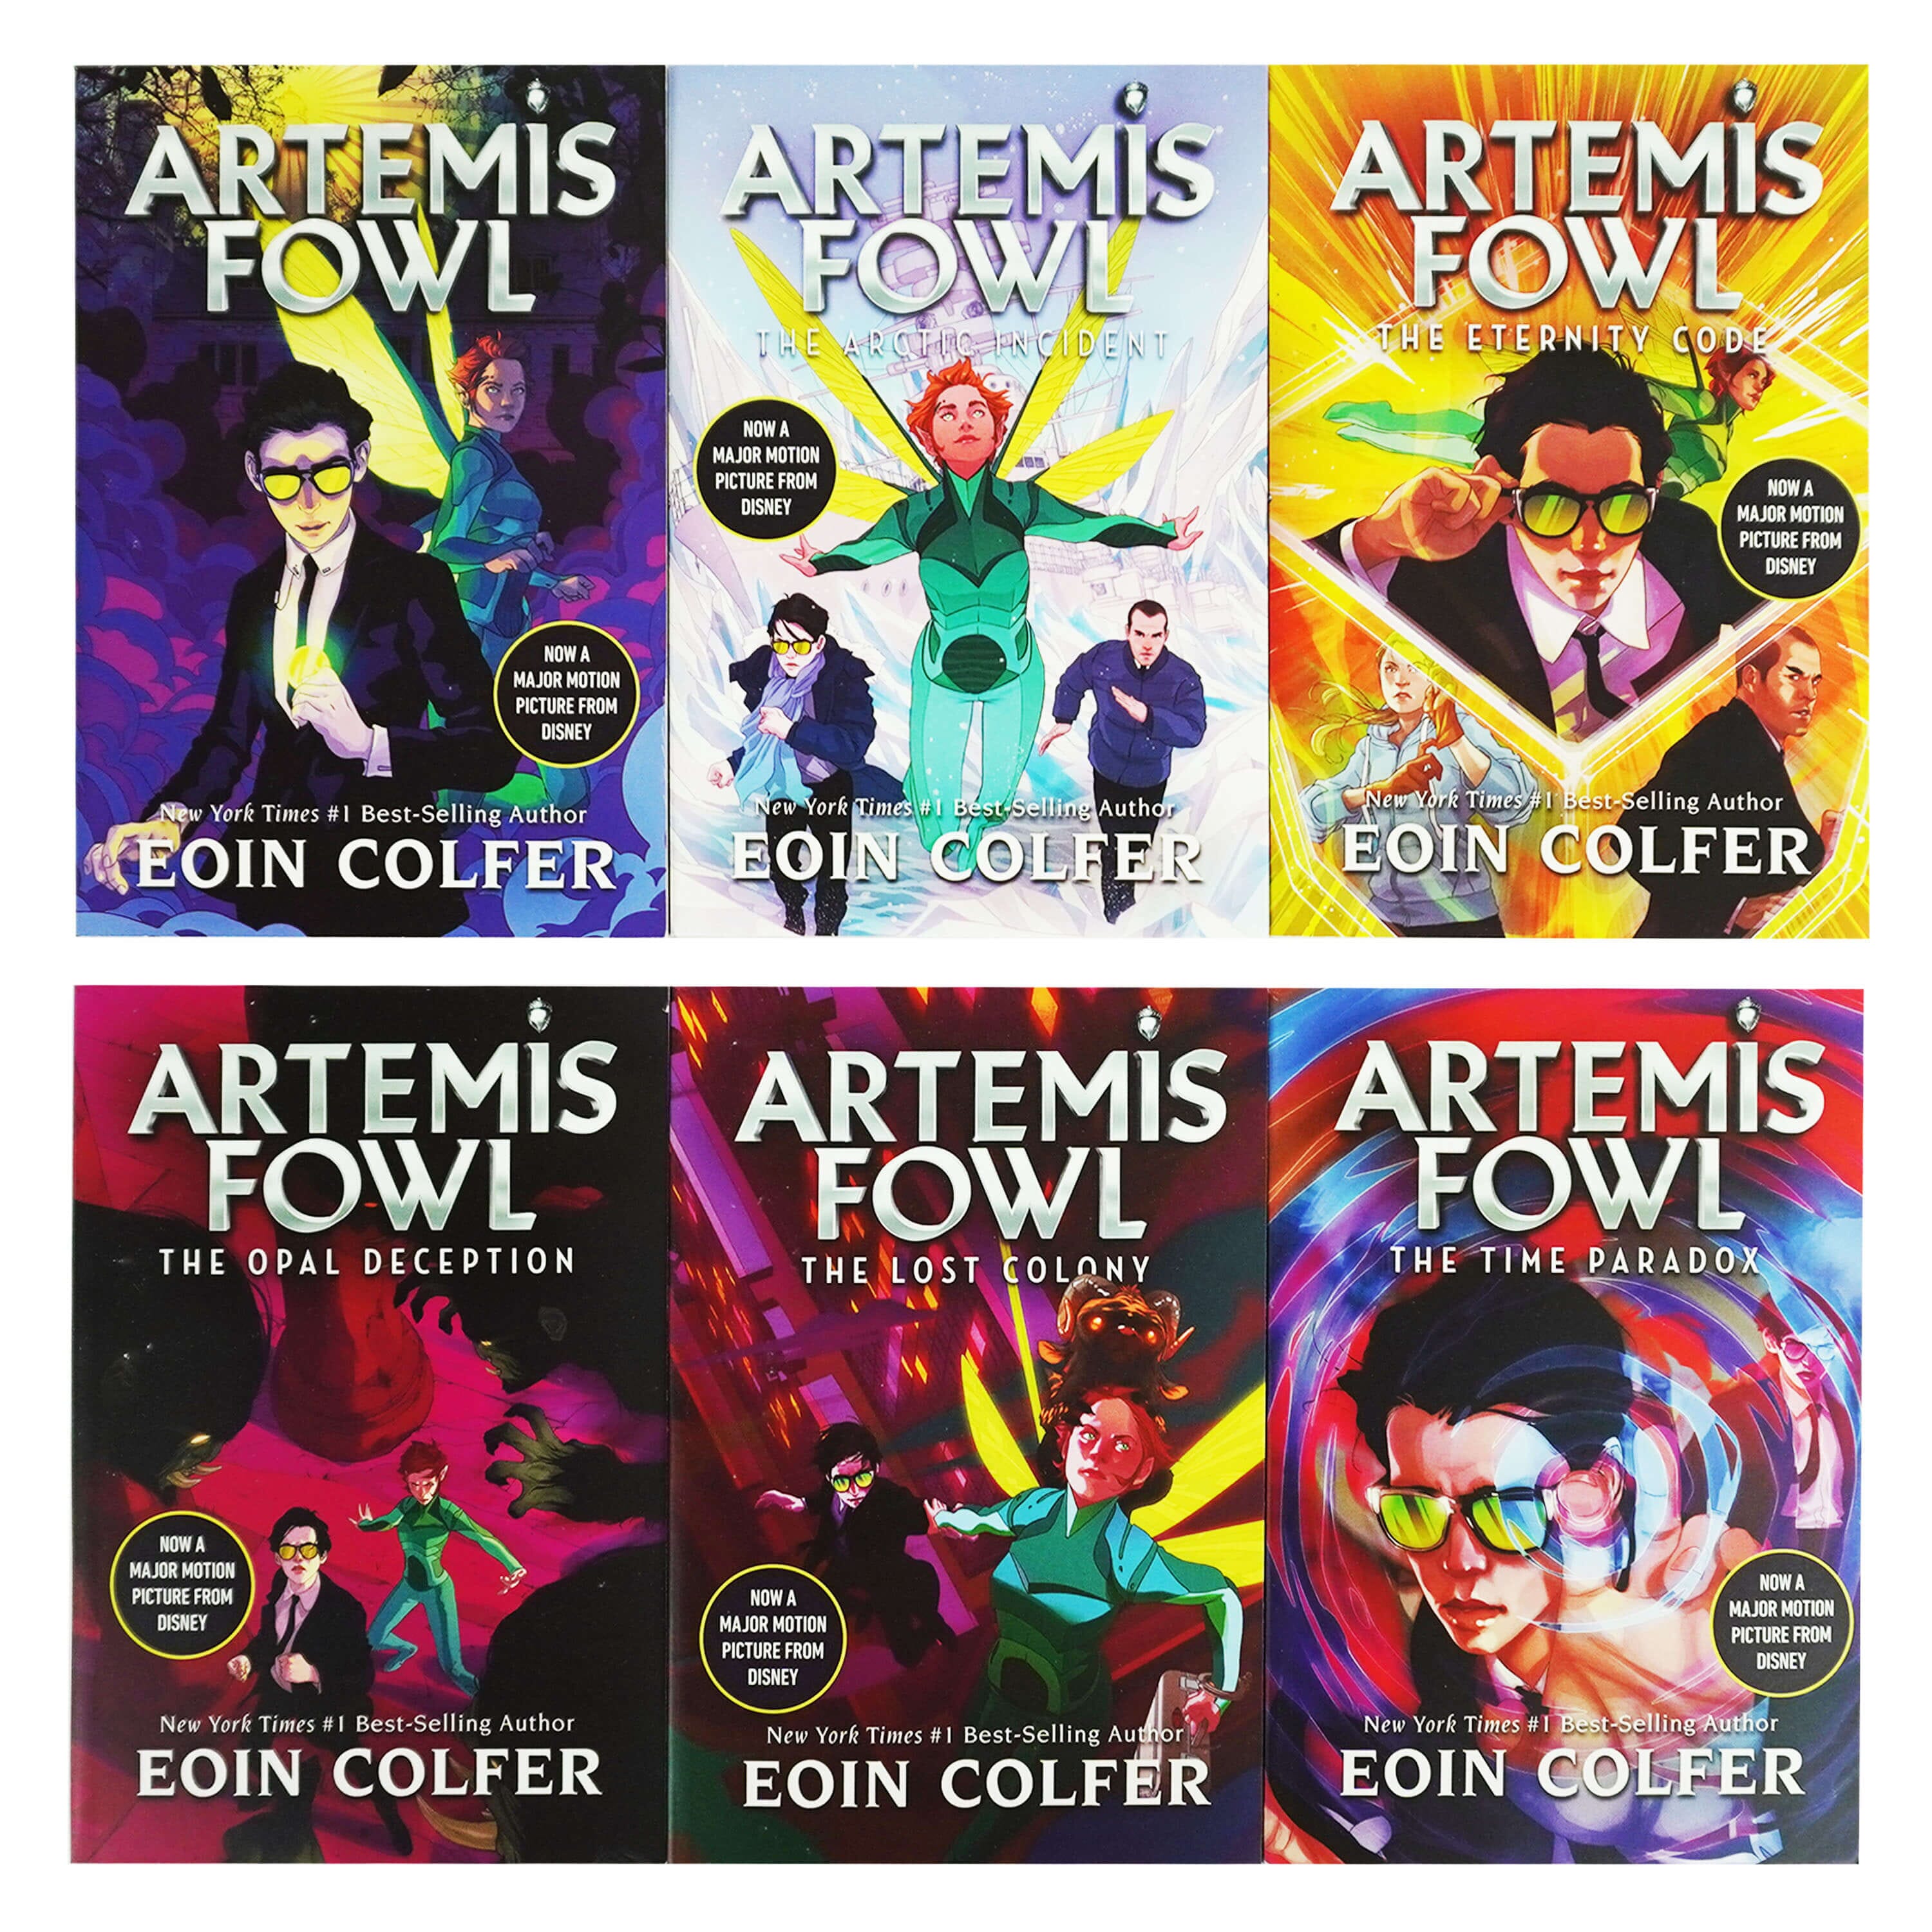 Artemis Fowl: Genius at Work: Codes, Activities, Puzzles, and More